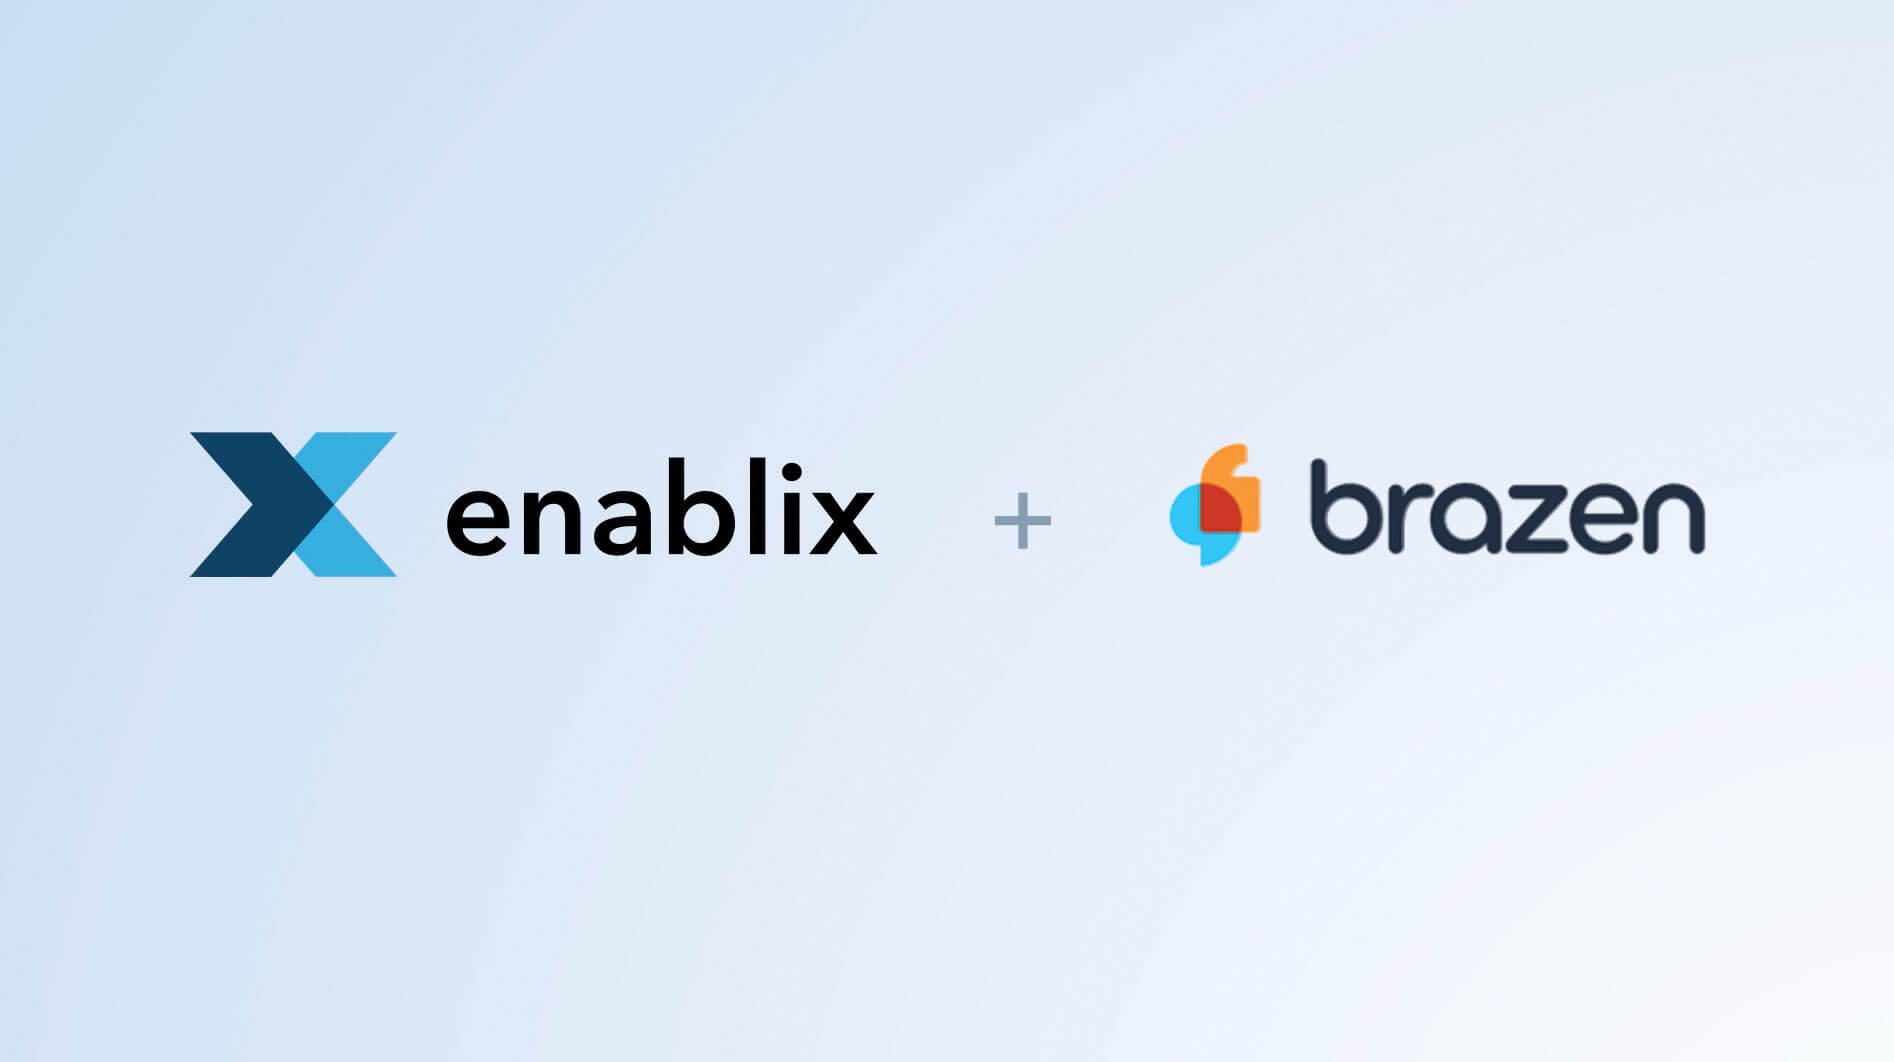 Enablix and Brazen, better together.